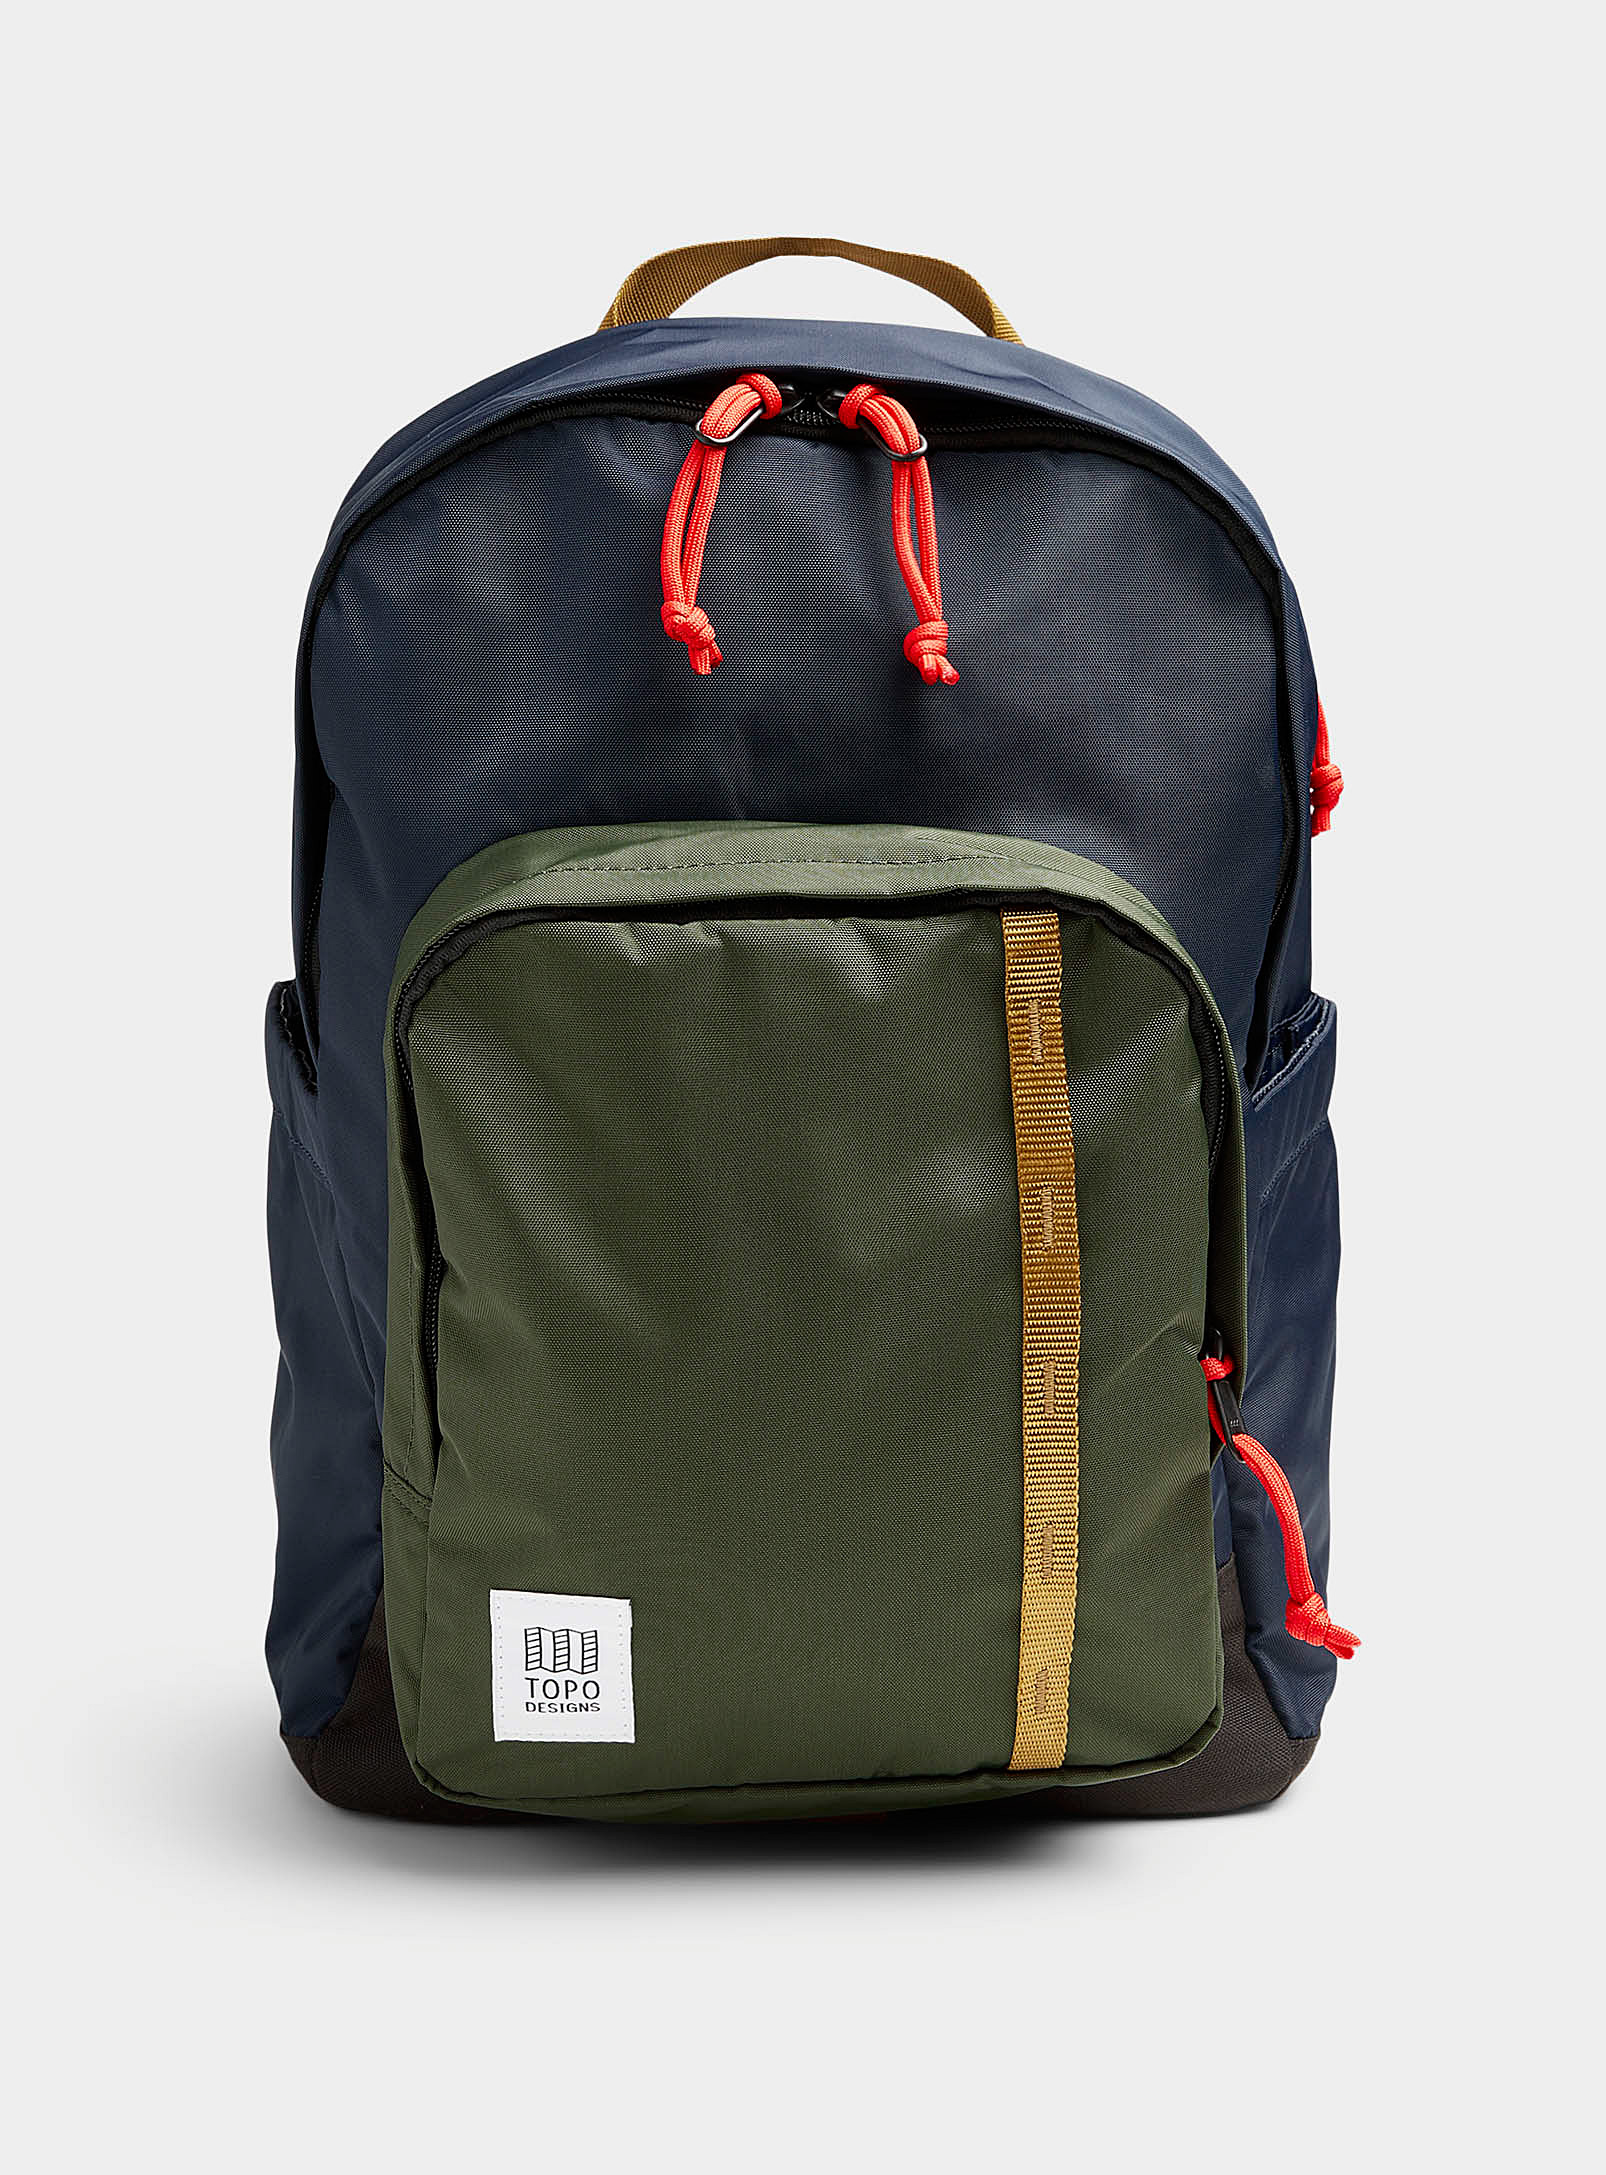 Topo Designs - Men's Session backpack